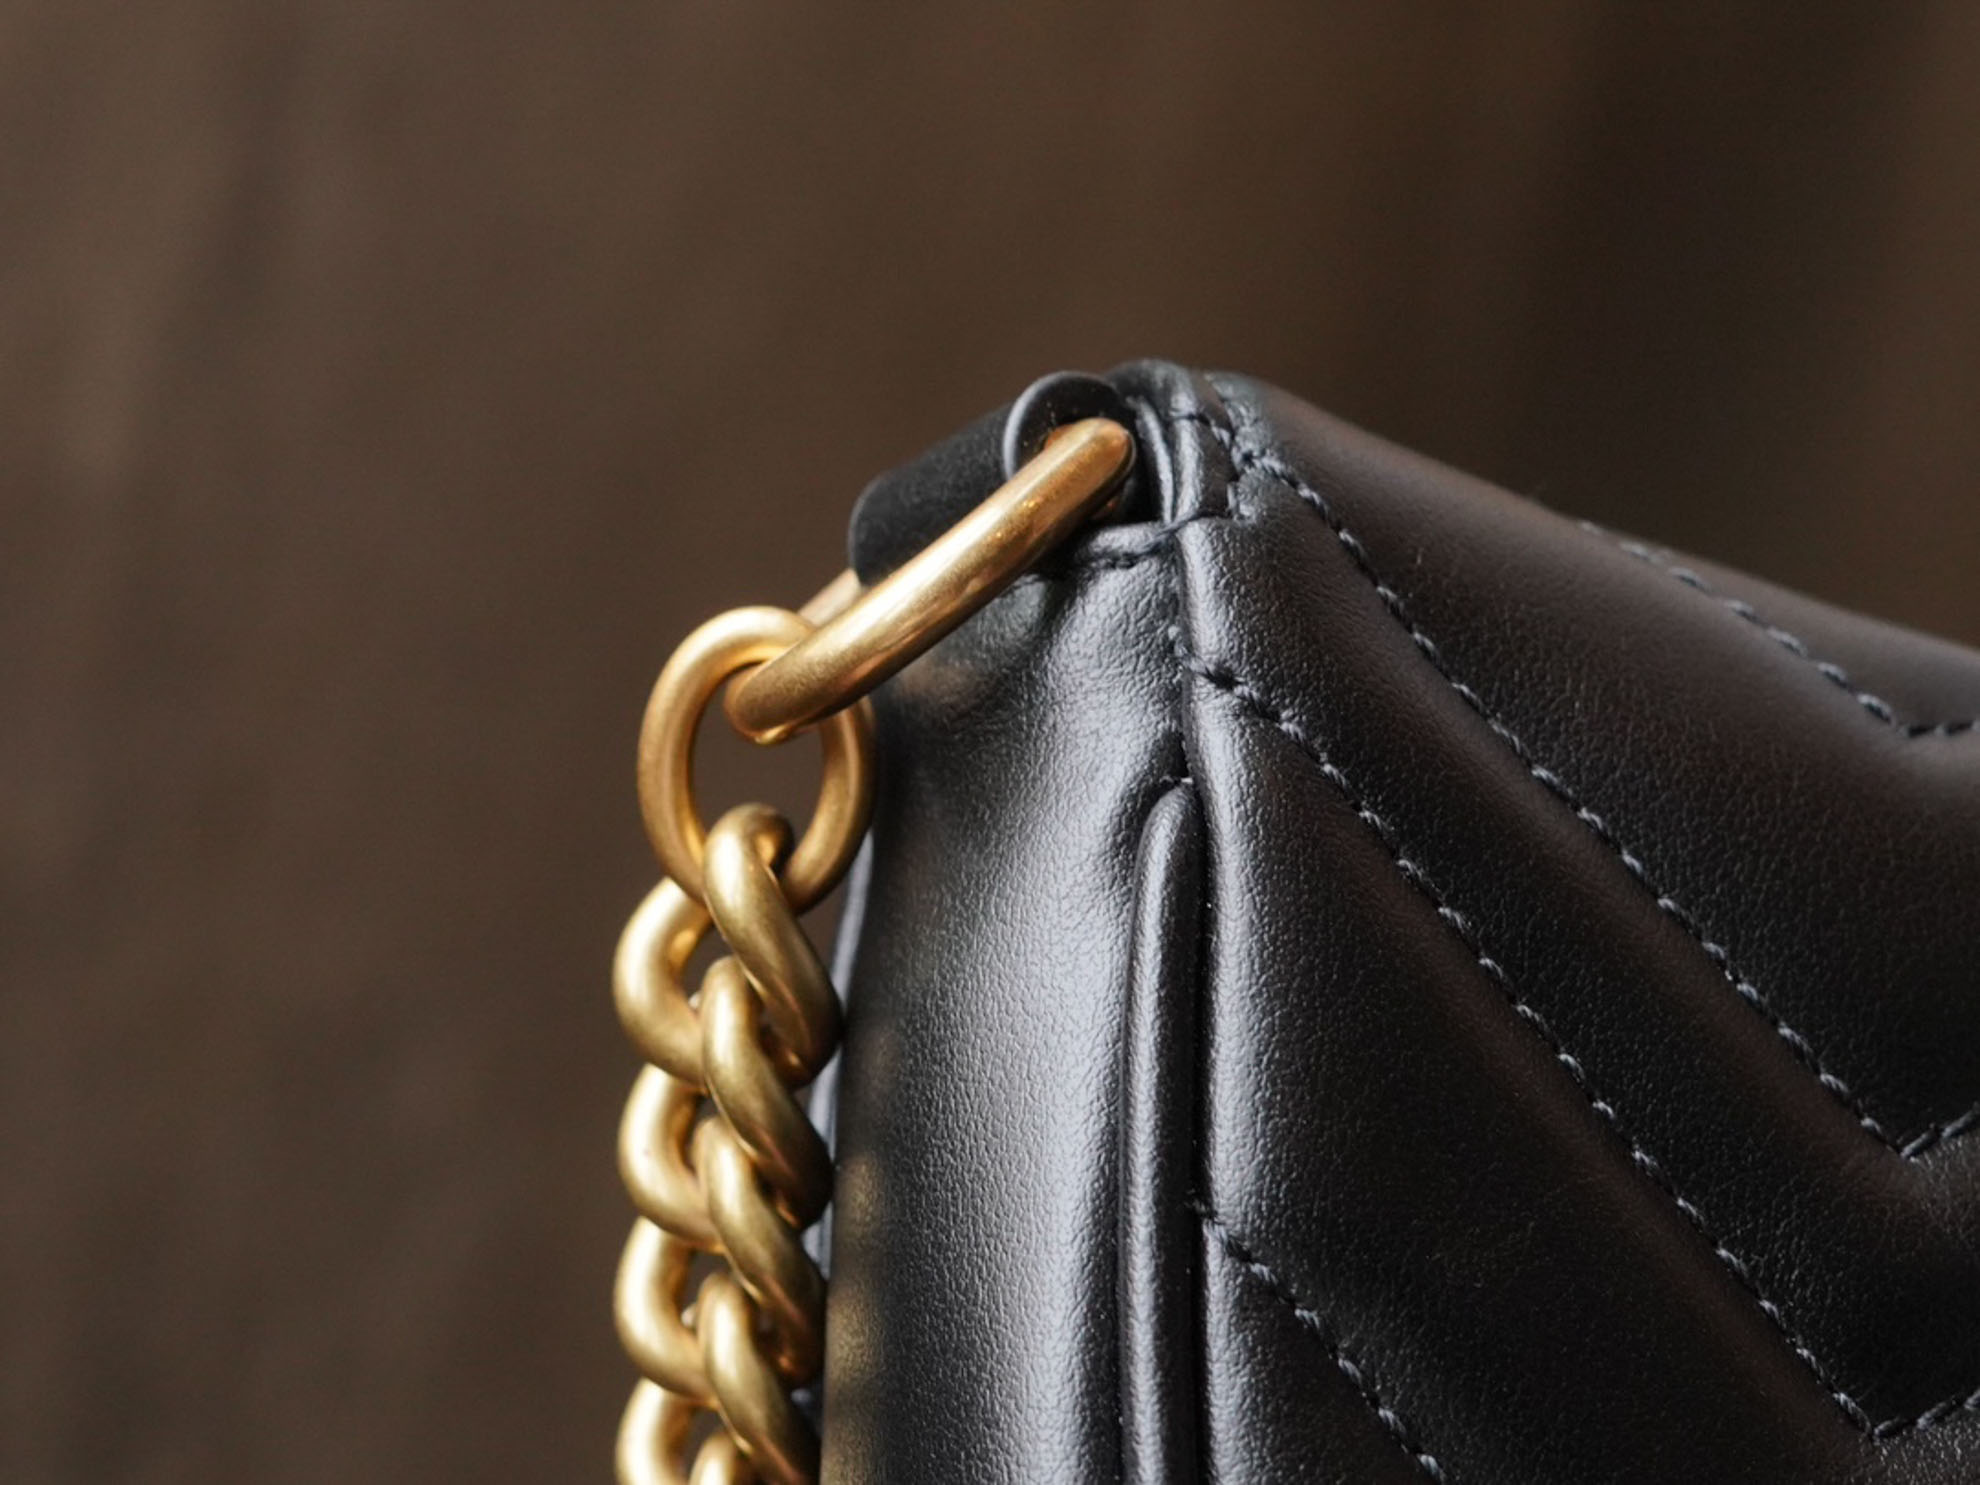 Túi Gucci Women's Black GG Marmont Matelassé Chain Mini Bag Black